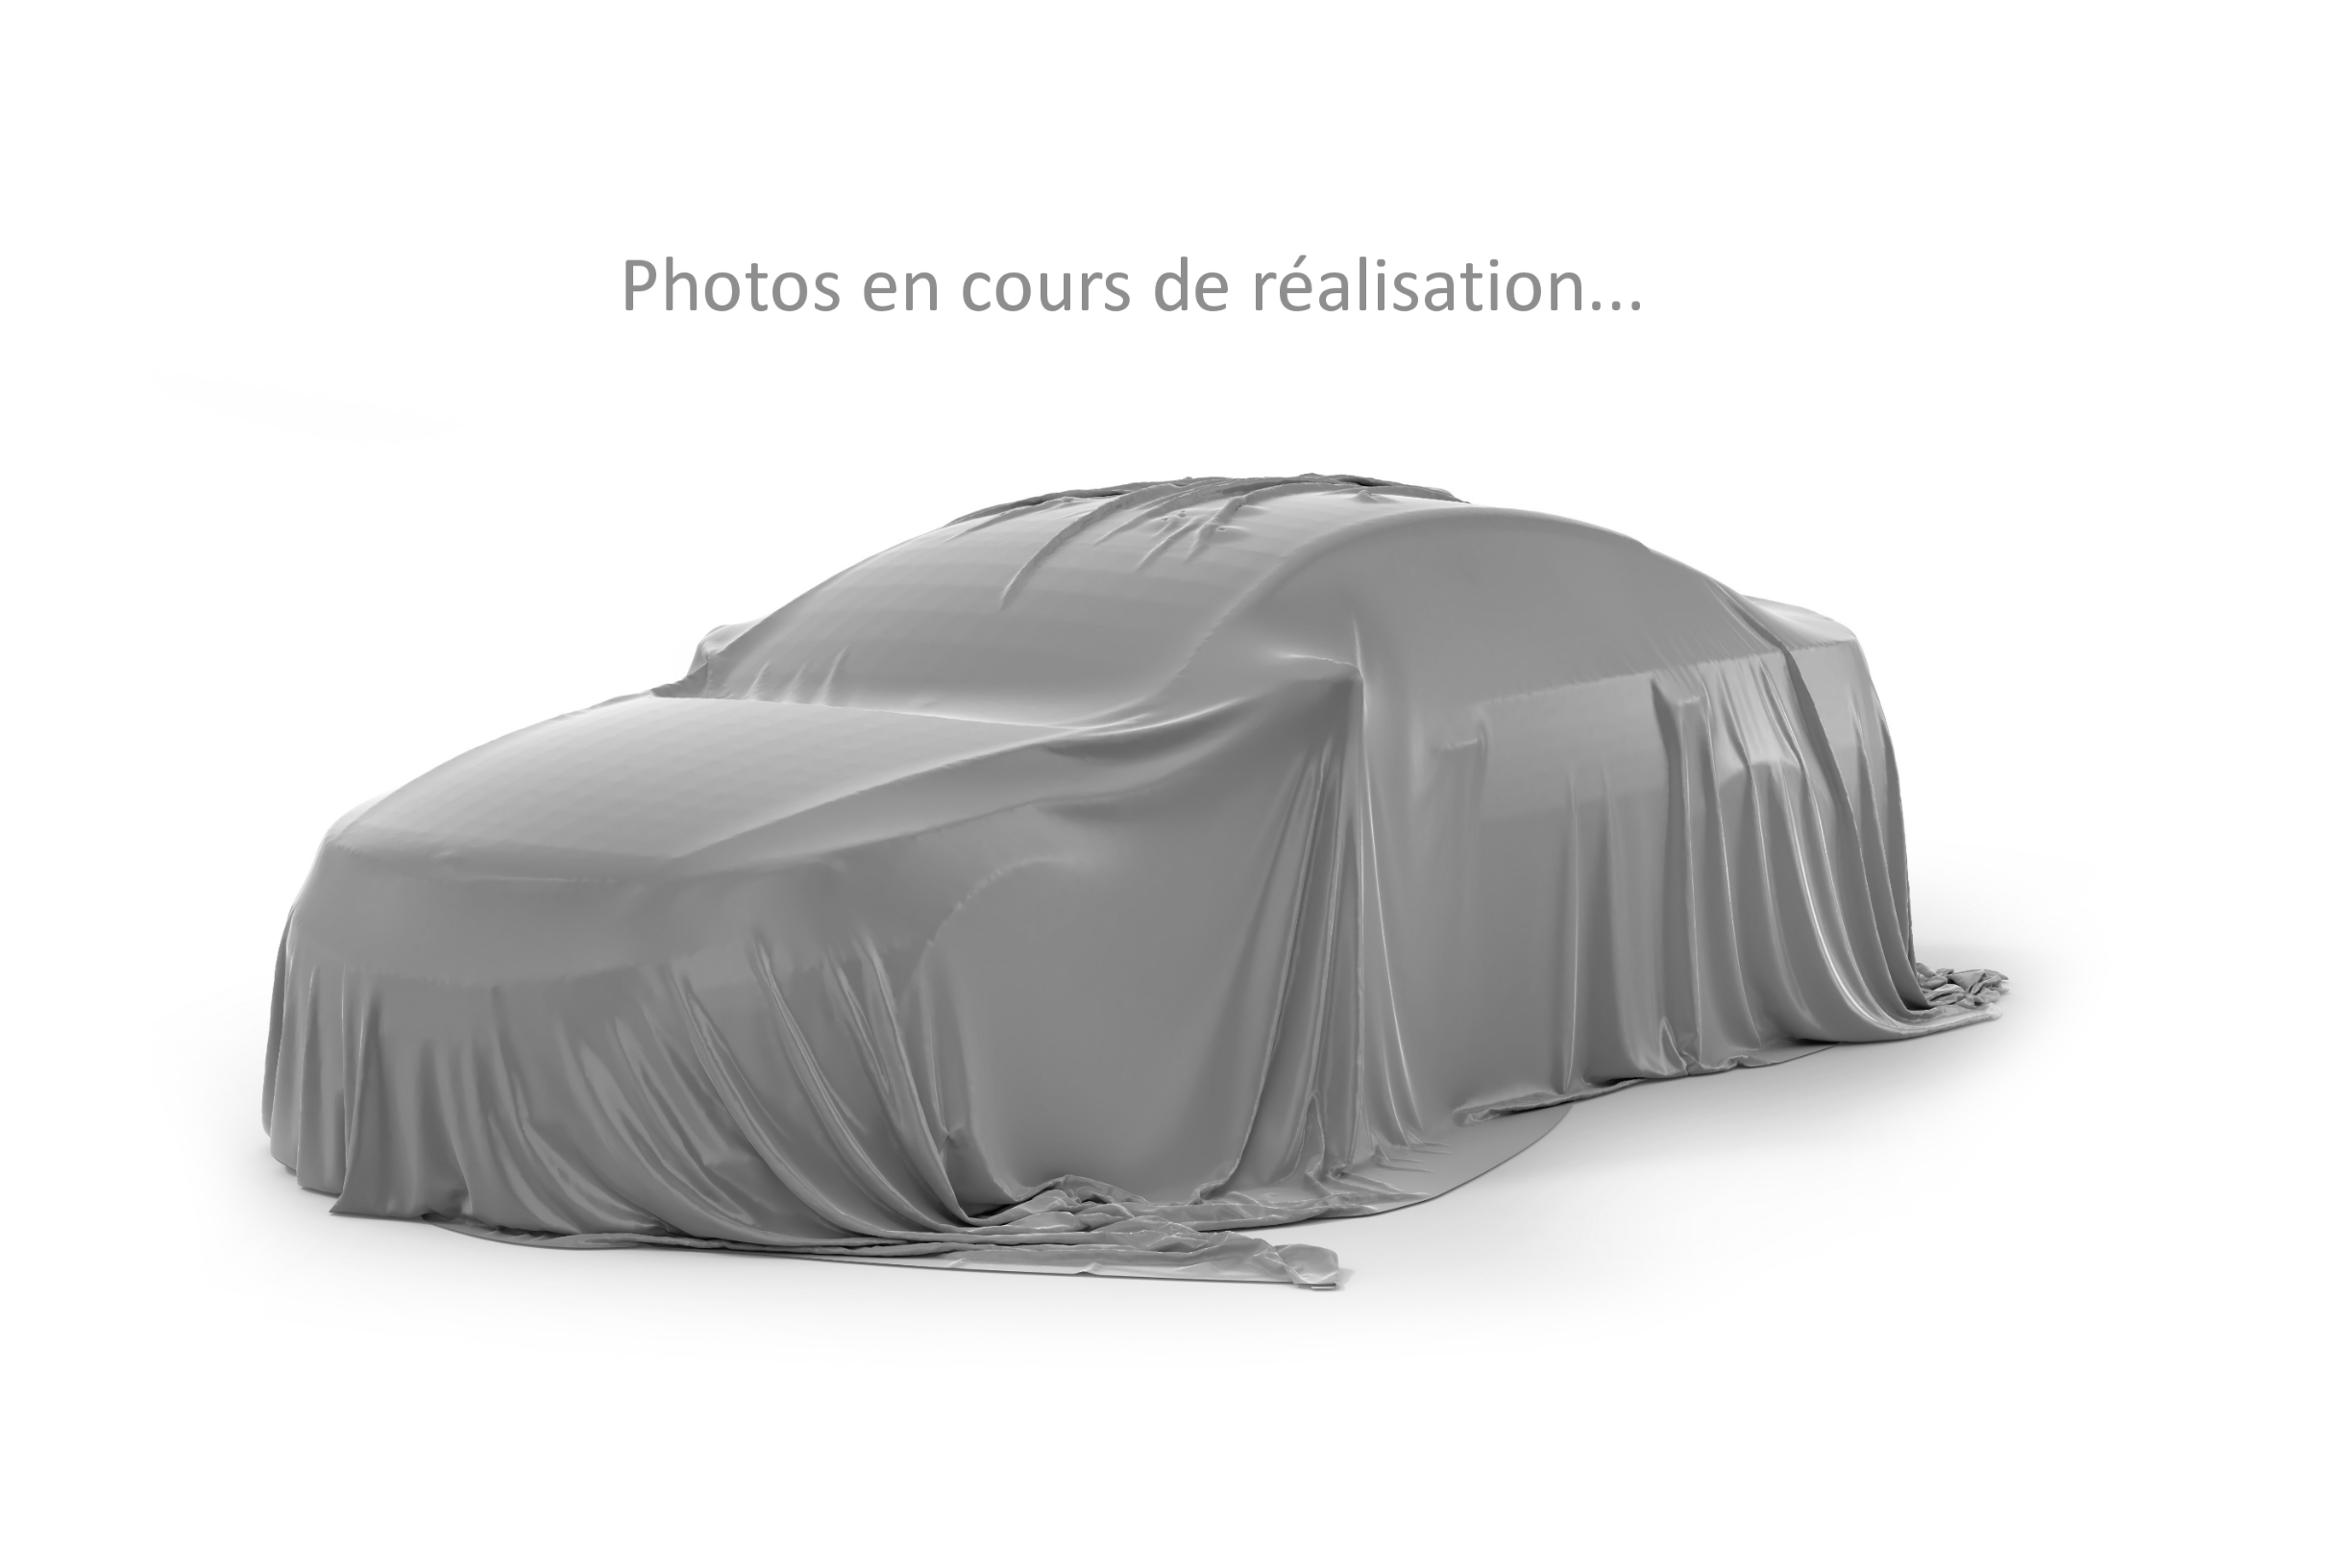 Prix de la Volkswagen Golf 7 : à partir de 17 790 € en France 